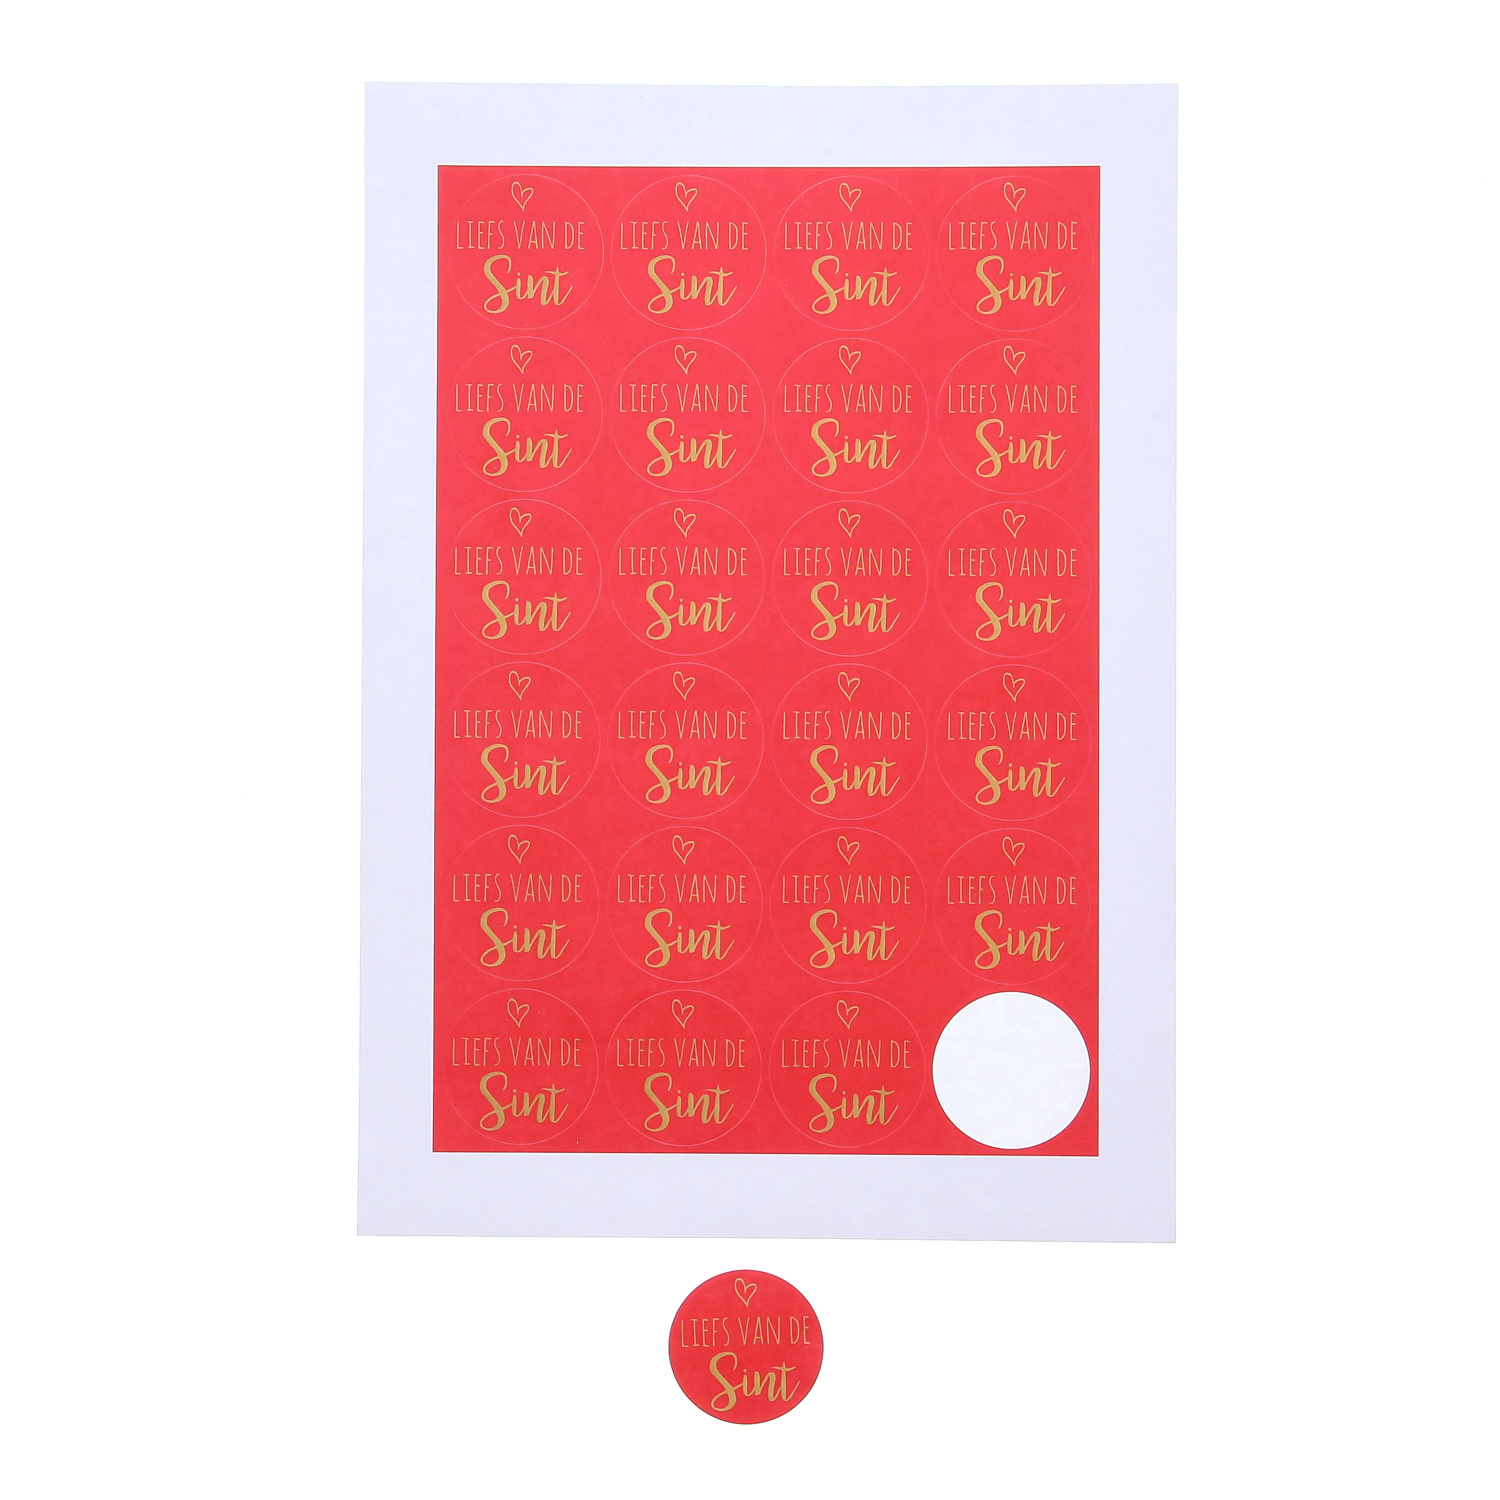 Sticker "Liefs van de Sint"  with heart red / gold - 4 cm - 120 pieces